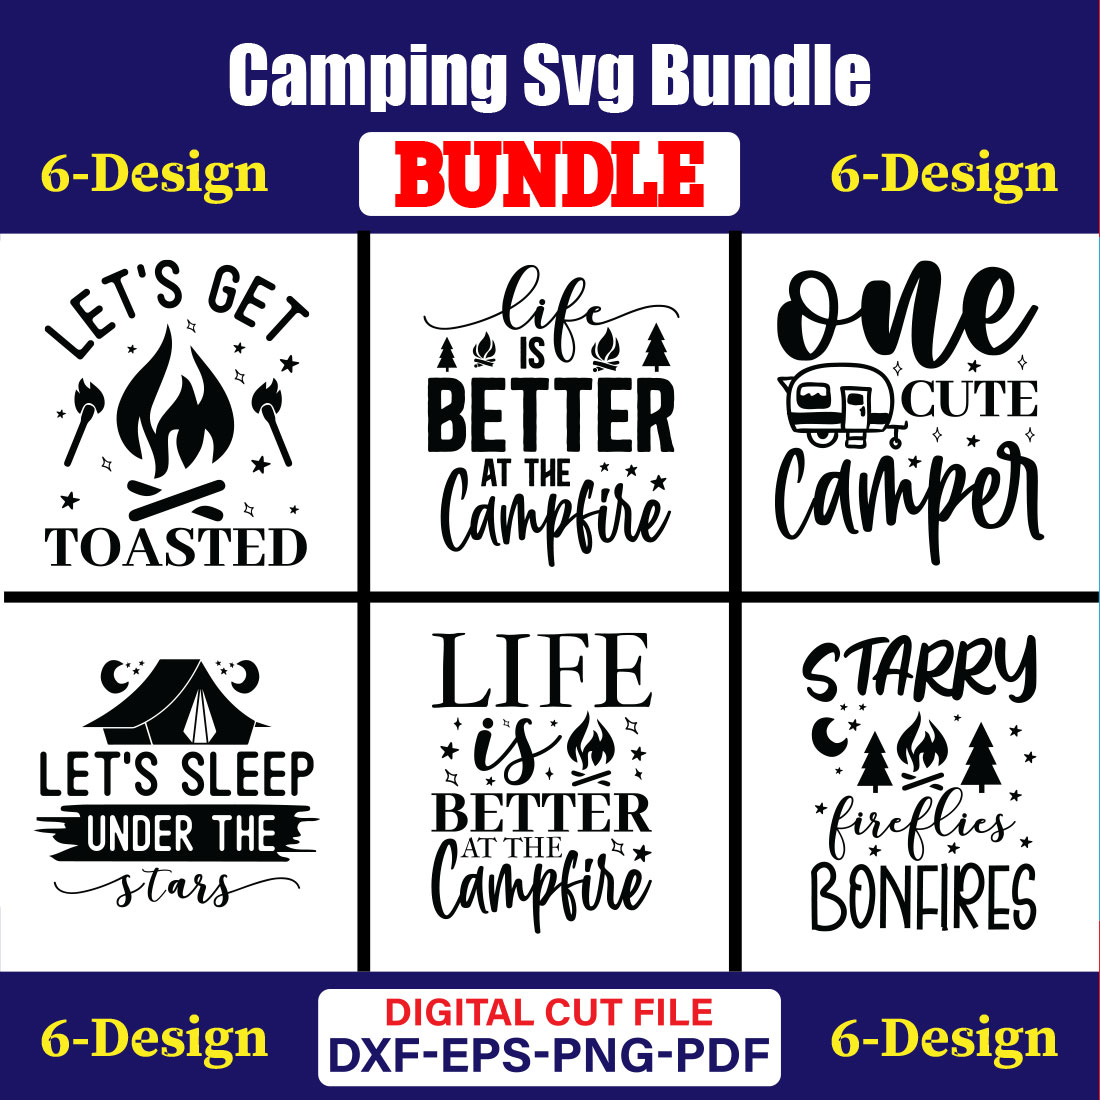 Camping T-shirt Design Bundle Vol-6 cover image.